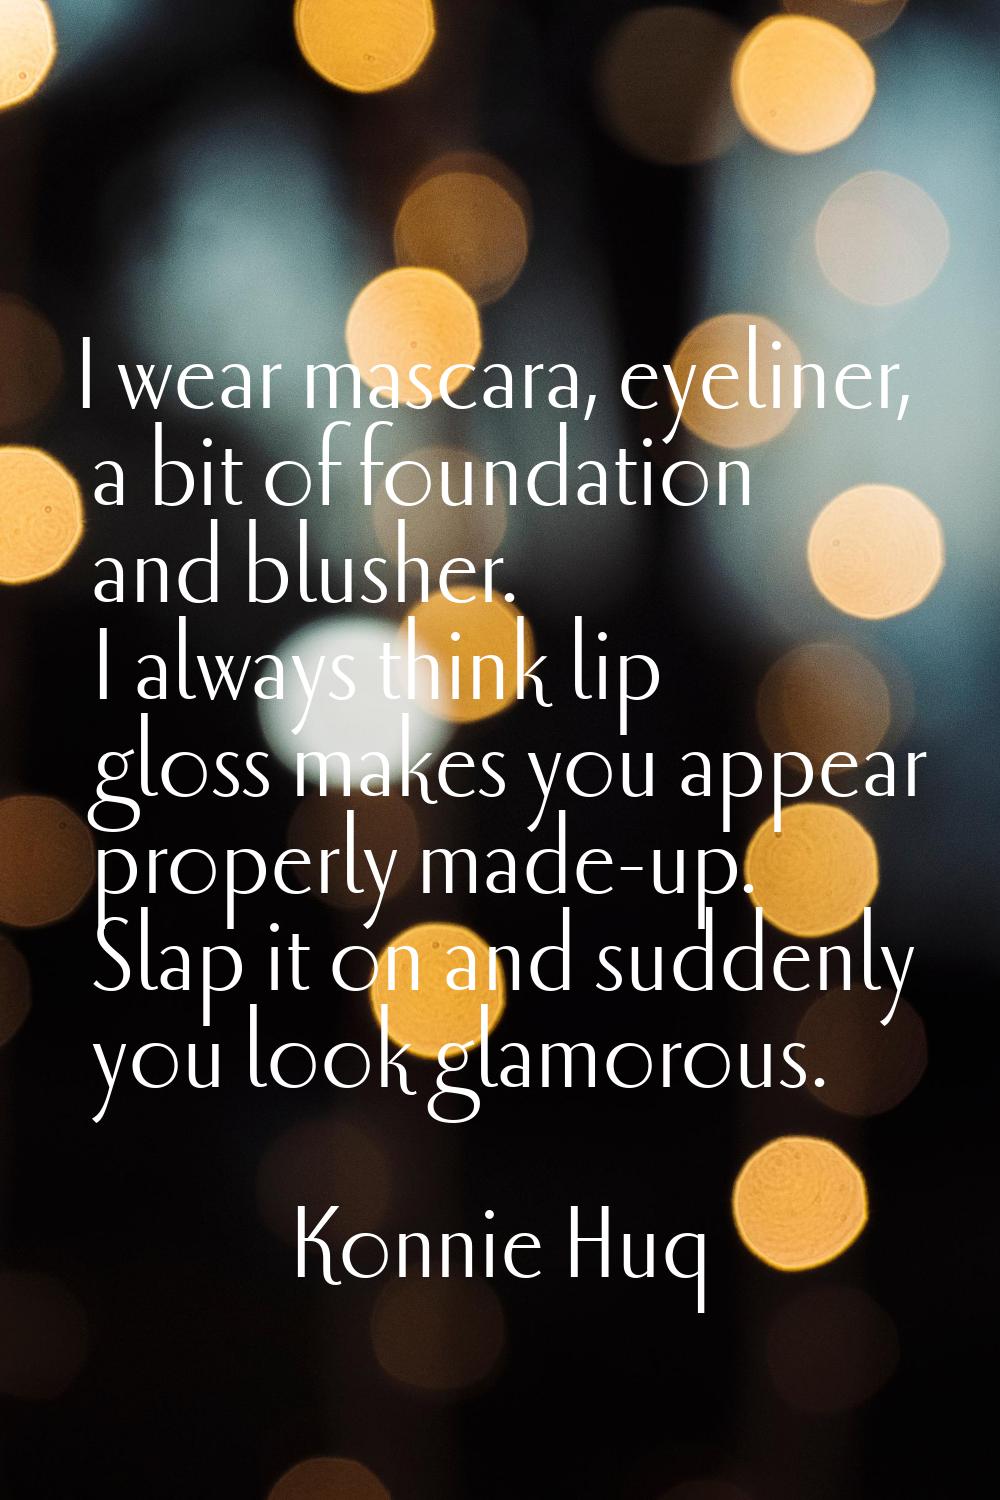 I wear mascara, eyeliner, a bit of foundation and blusher. I always think lip gloss makes you appea